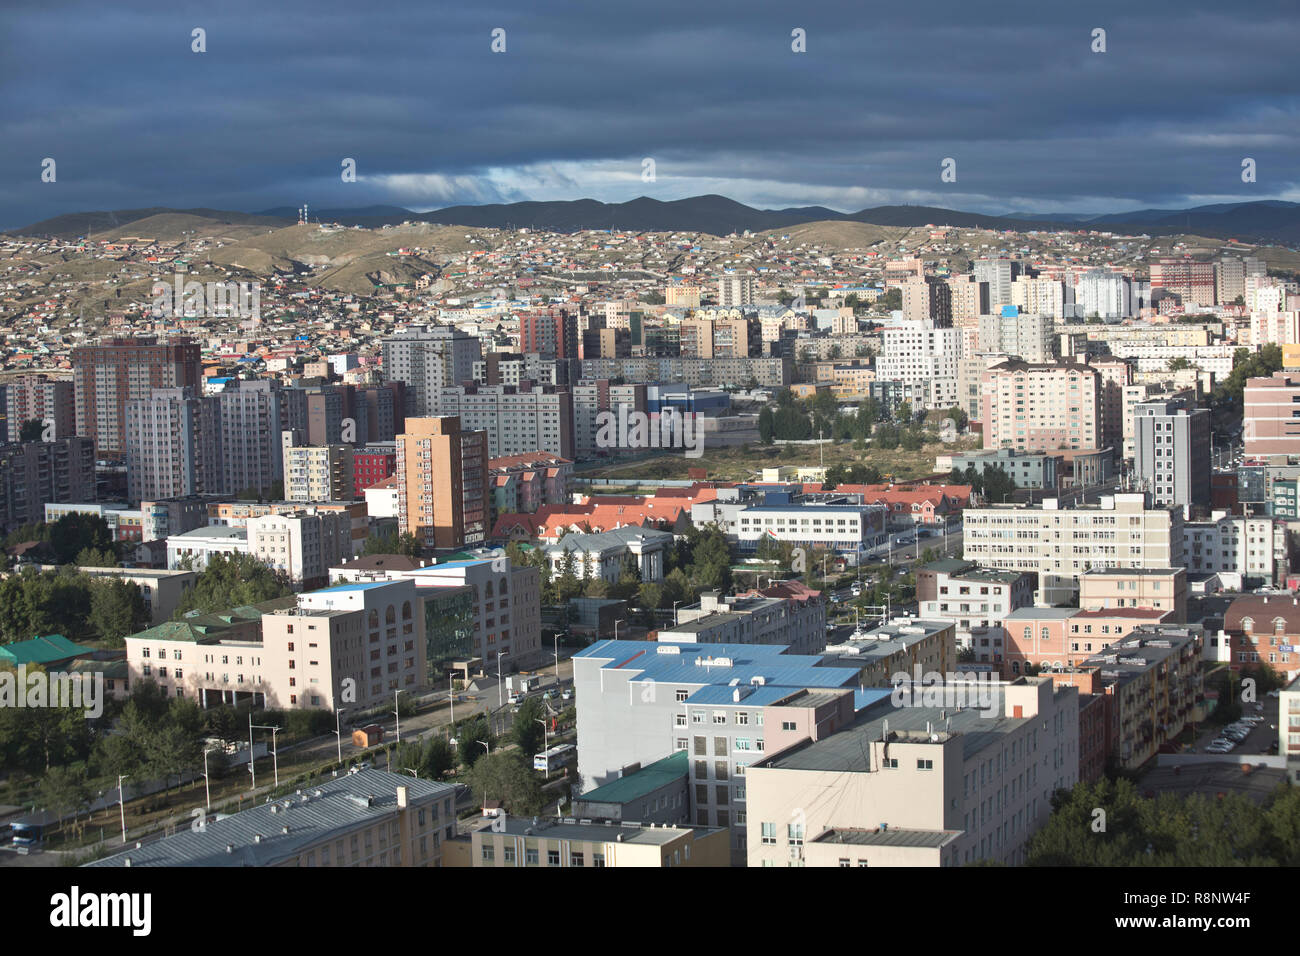 Views of Ulan Bator, Mongolia. Stock Photo